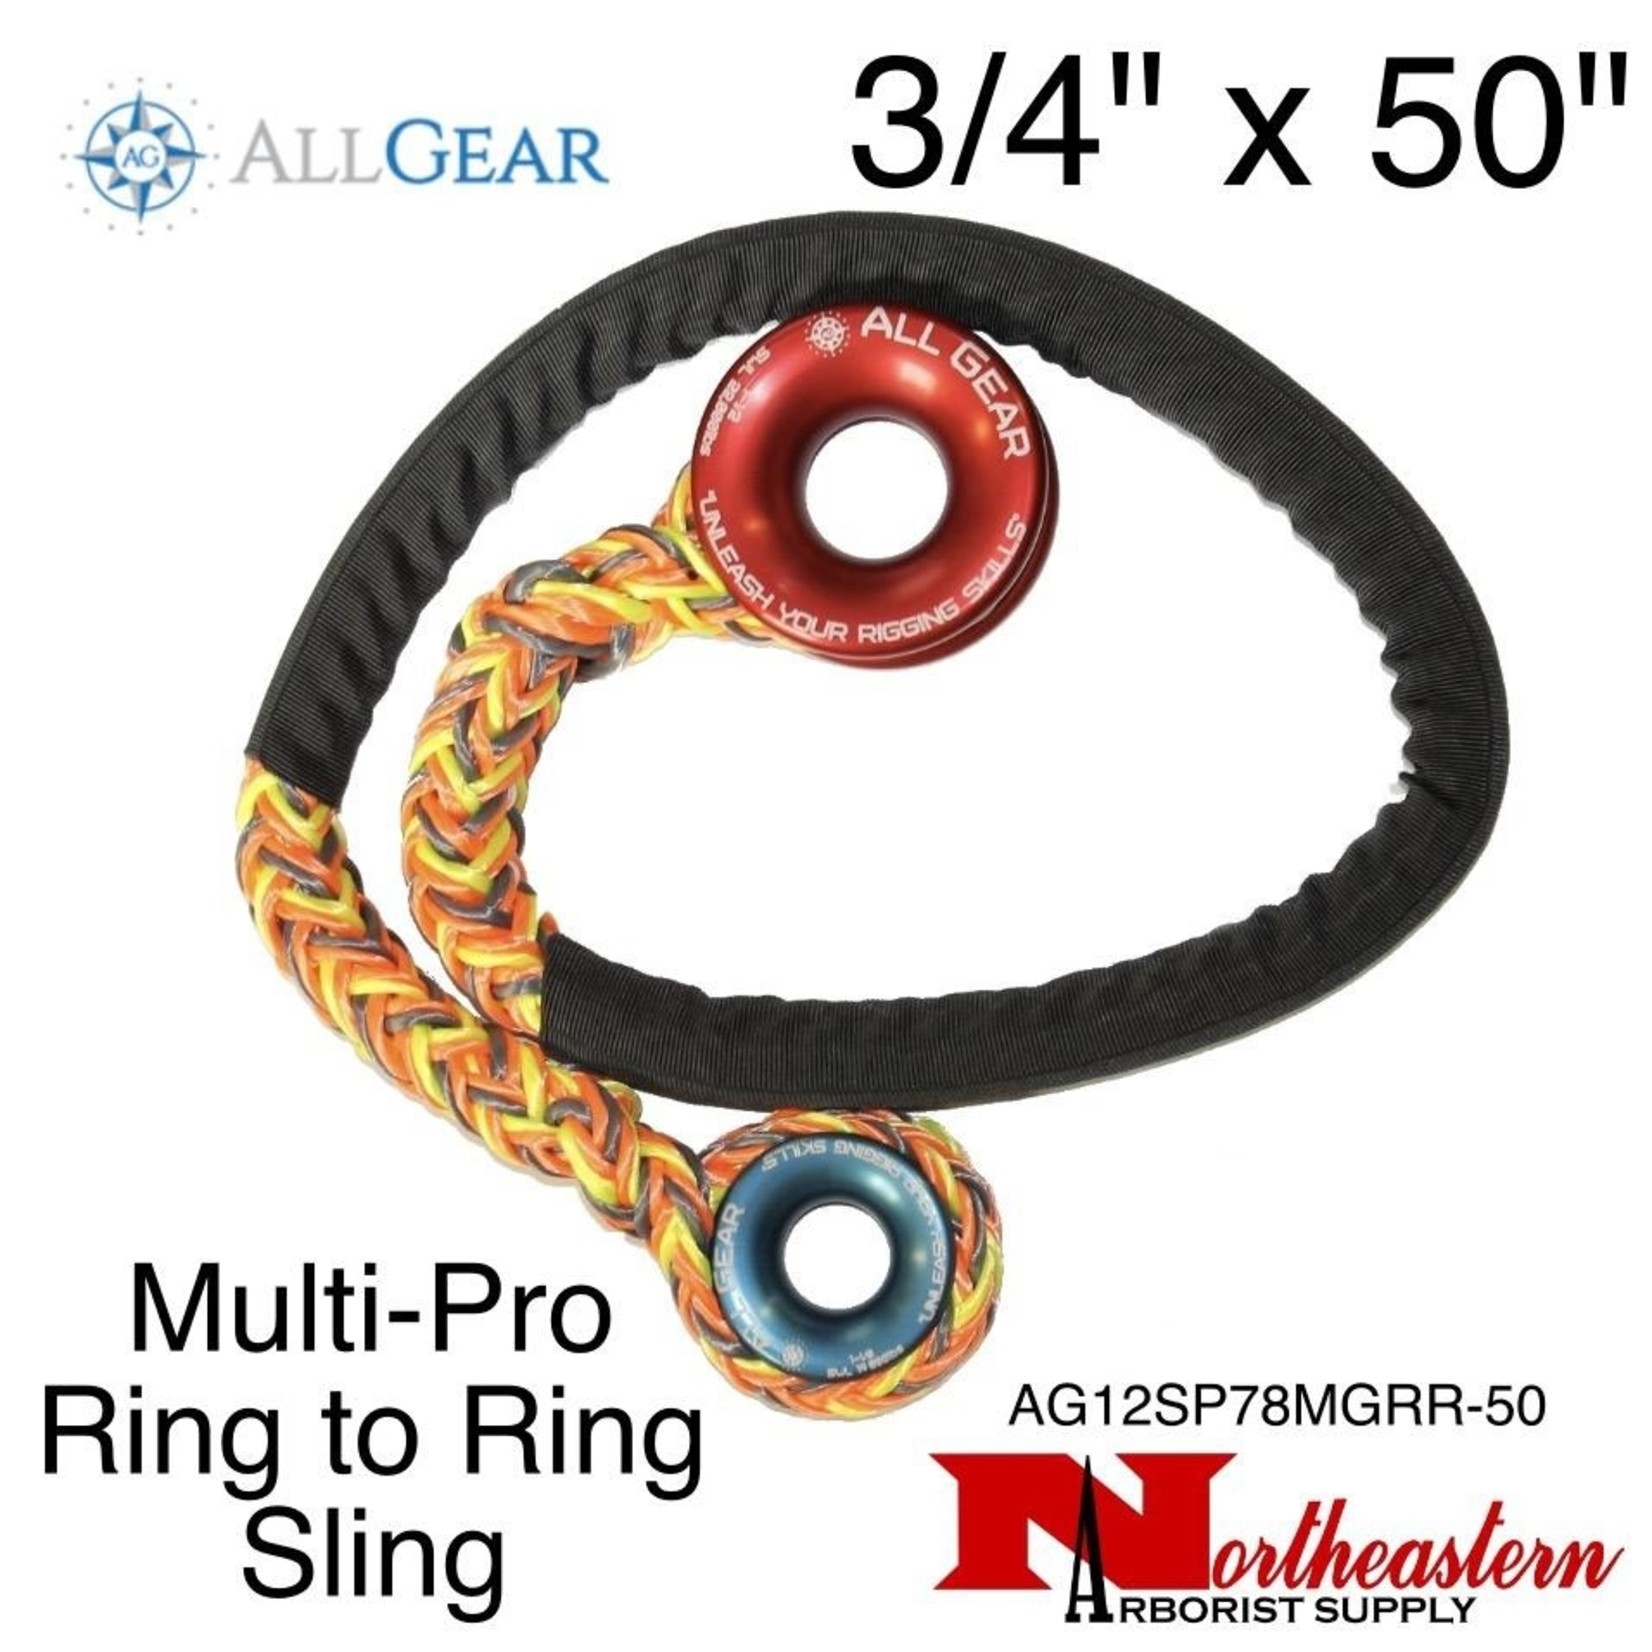 All Gear Inc. Multi Pro Ring to Ring Sling 3/4" x 50" 21,000 Lb. Avg. Tensile.